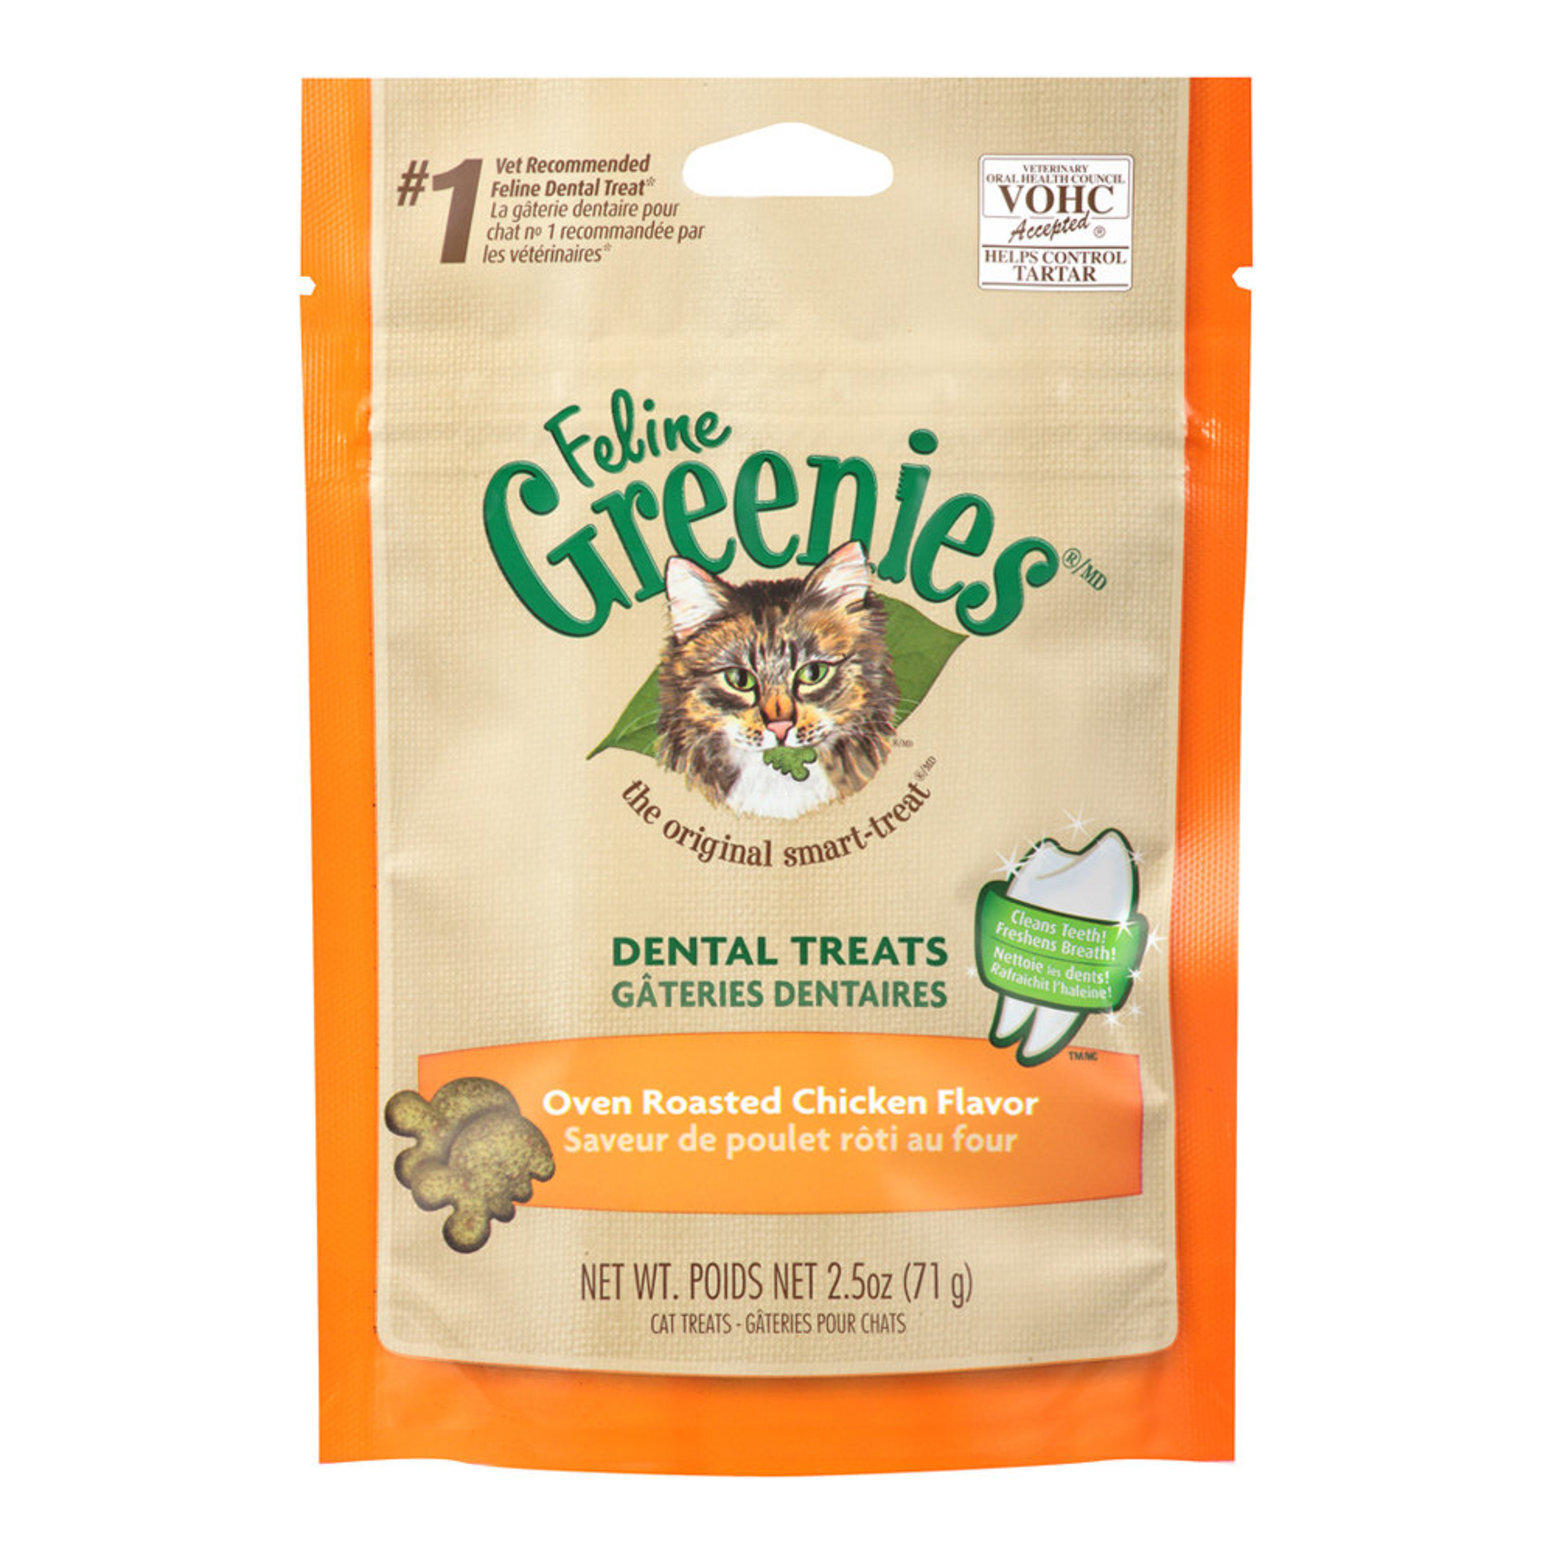 Feline Greenies Oven Roasted Chicken Flavour Dental Health Breath